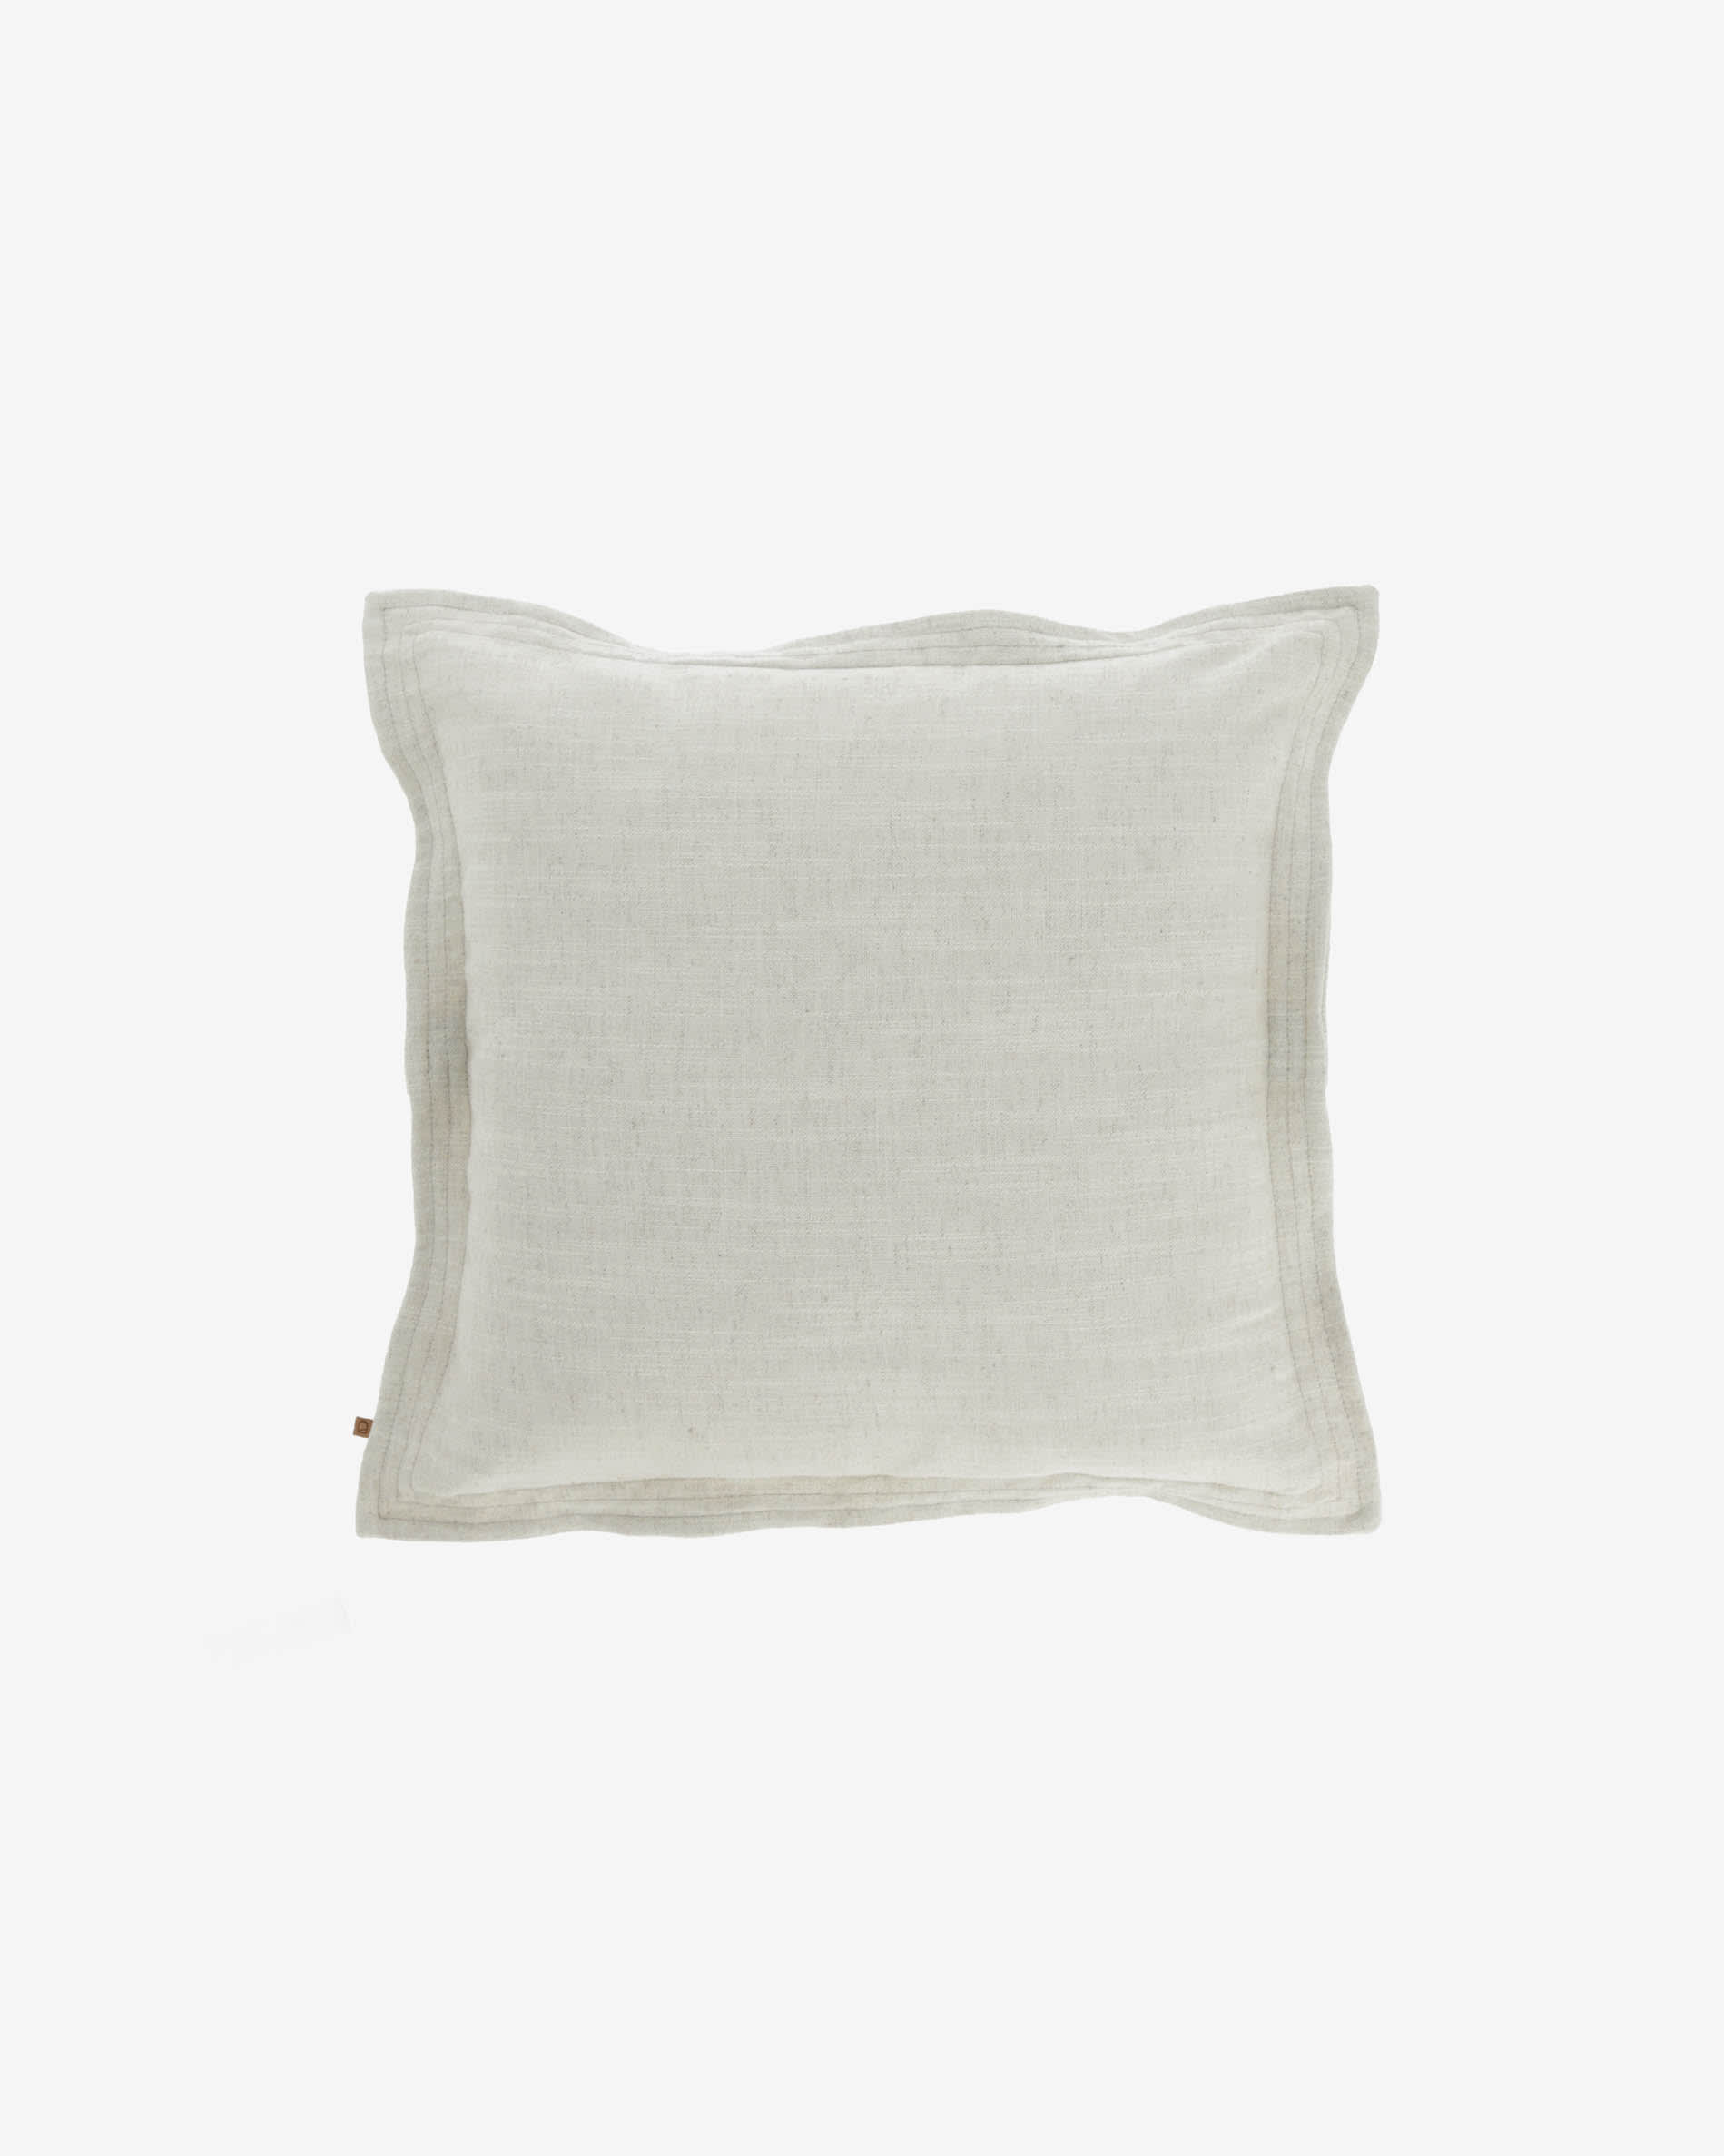 Maelina cushion cover in white, 45 x 45 cm